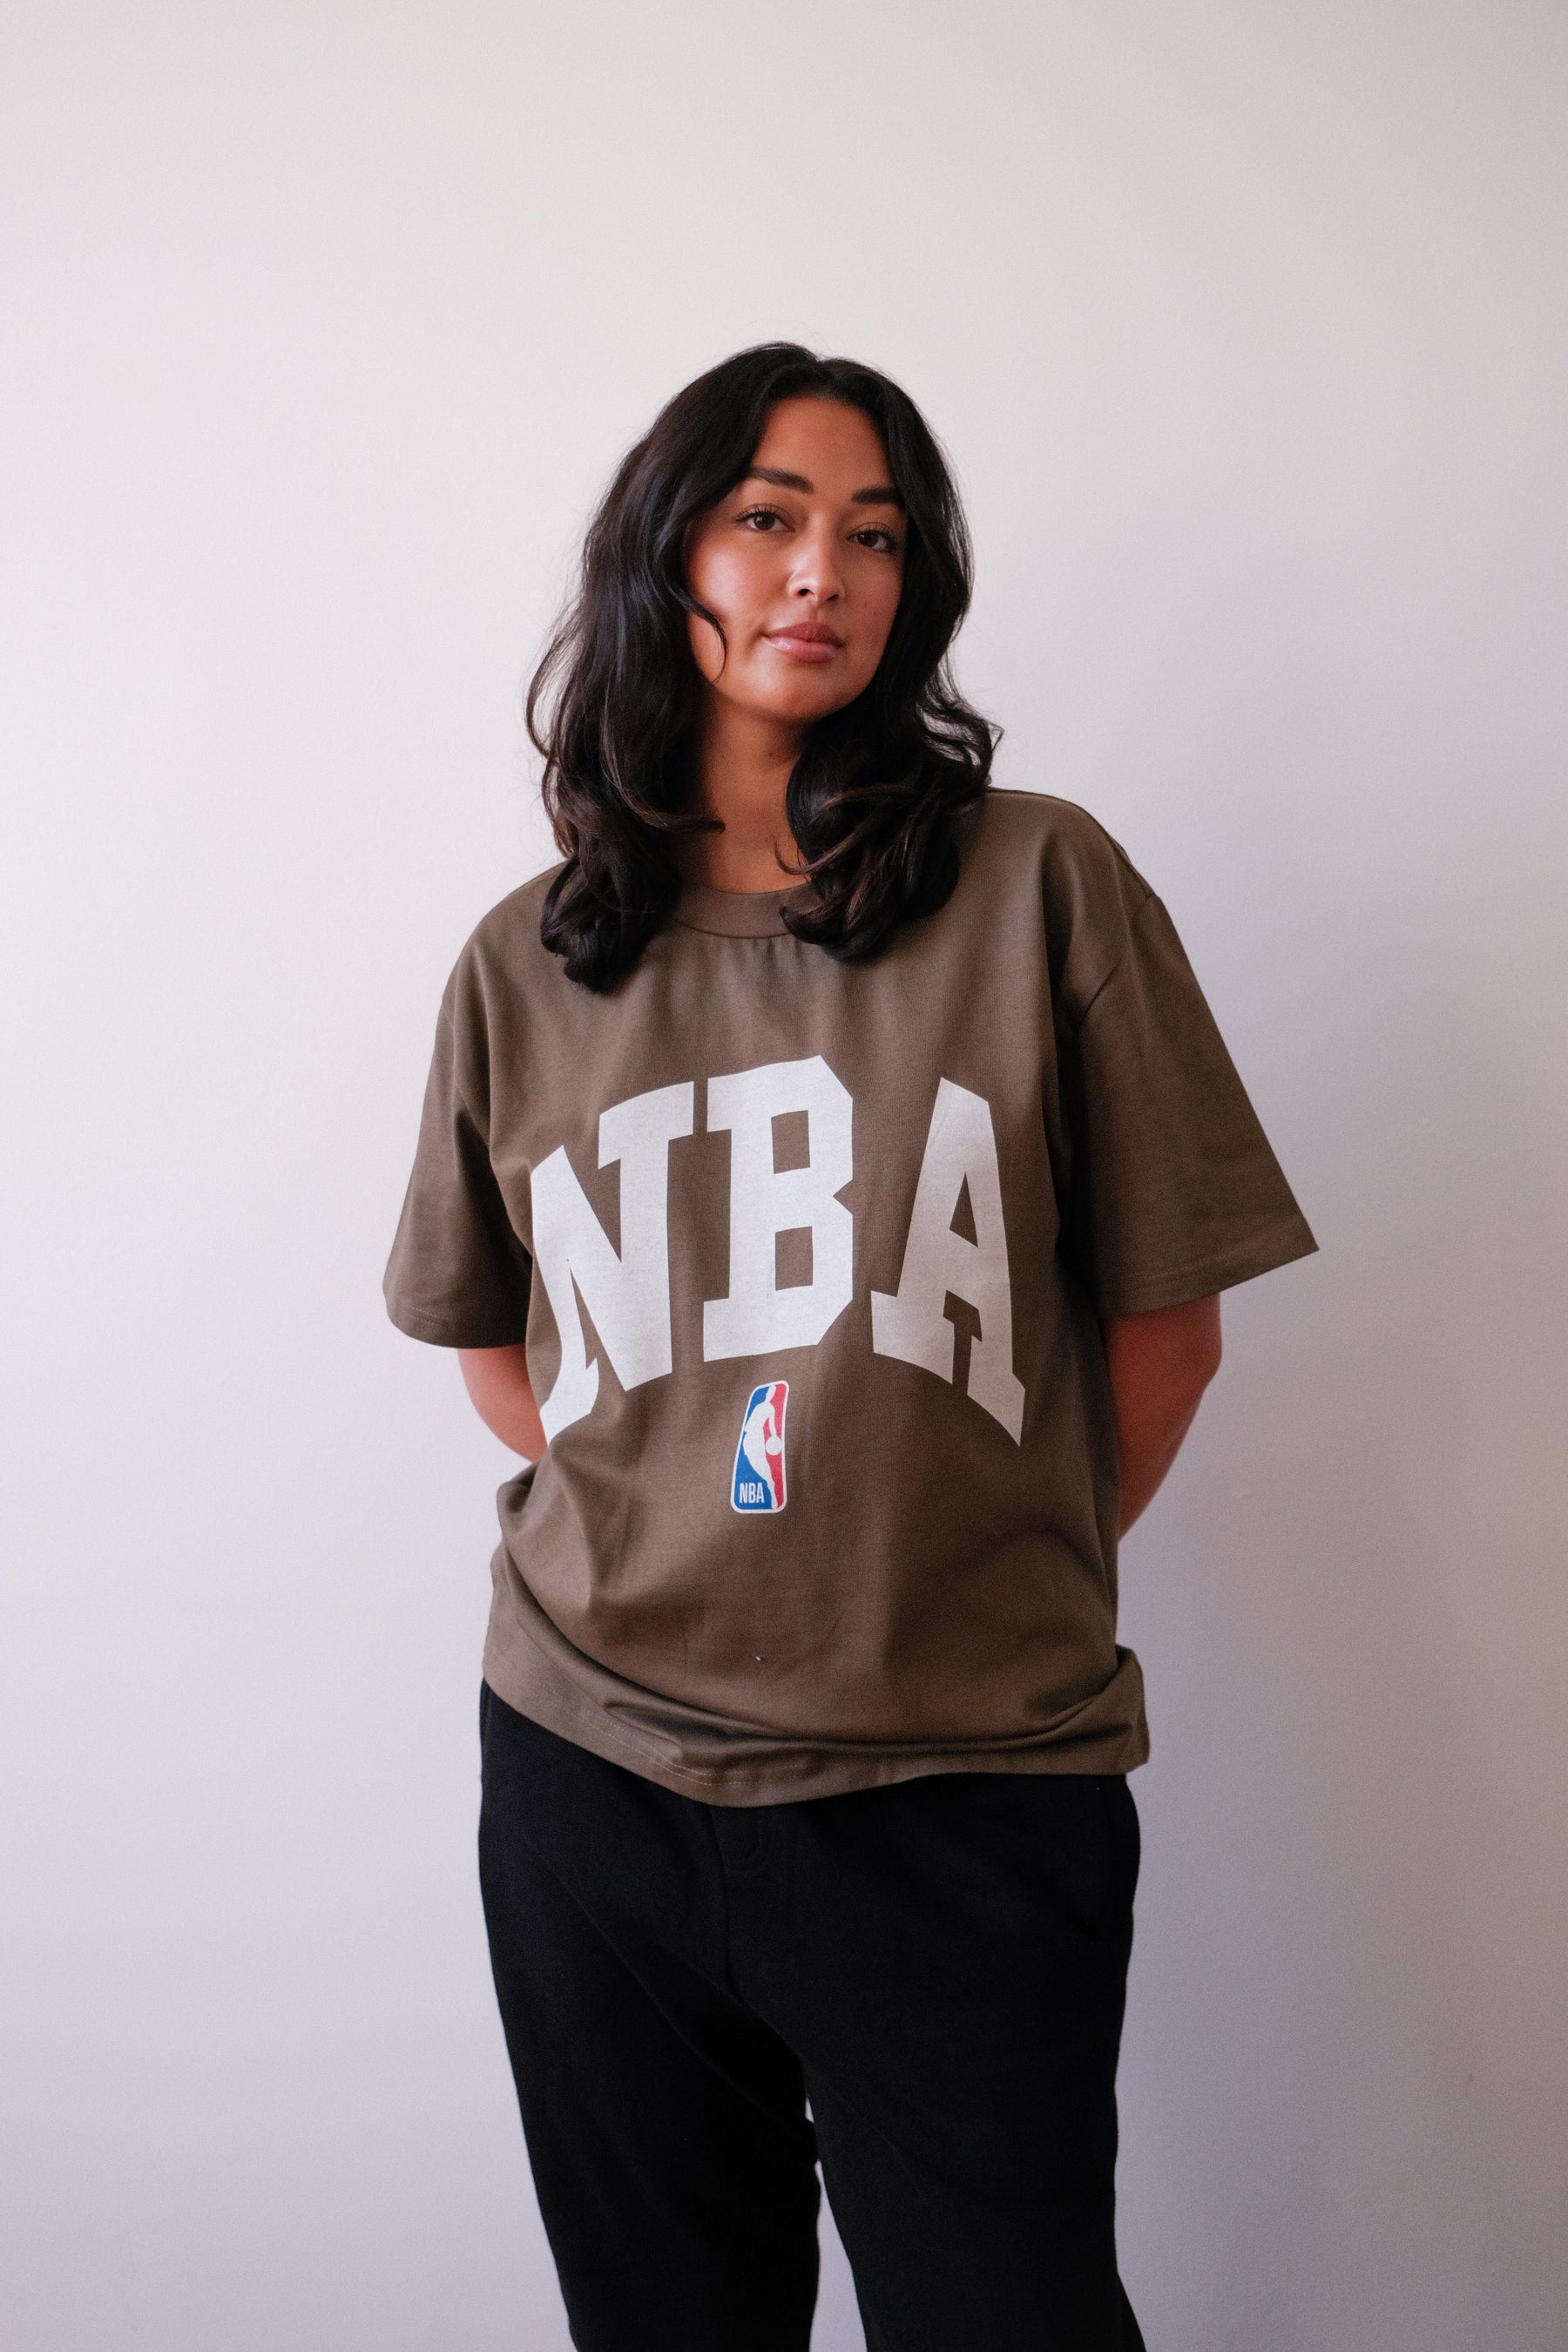 NBA Basketball is Life Heavyweight T-Shirt - Walnut